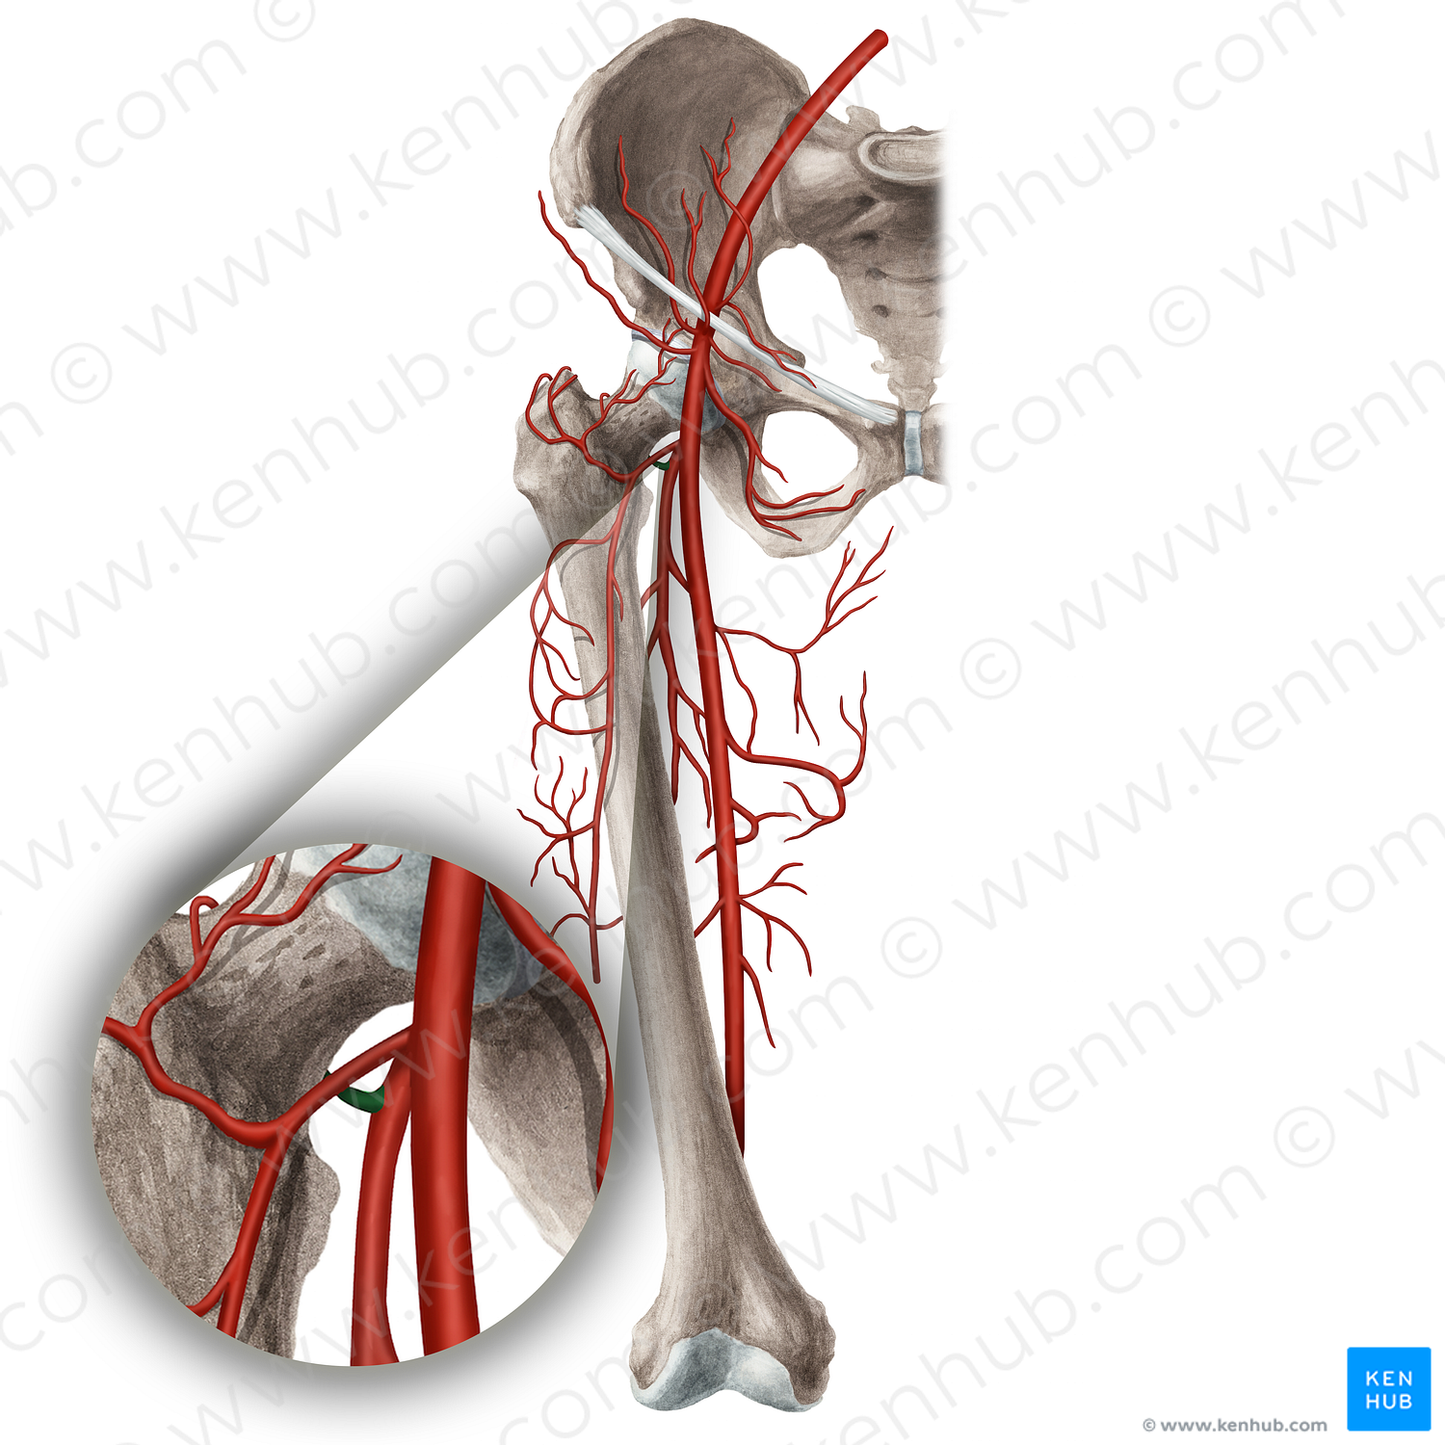 Medial circumflex femoral artery (#1034)